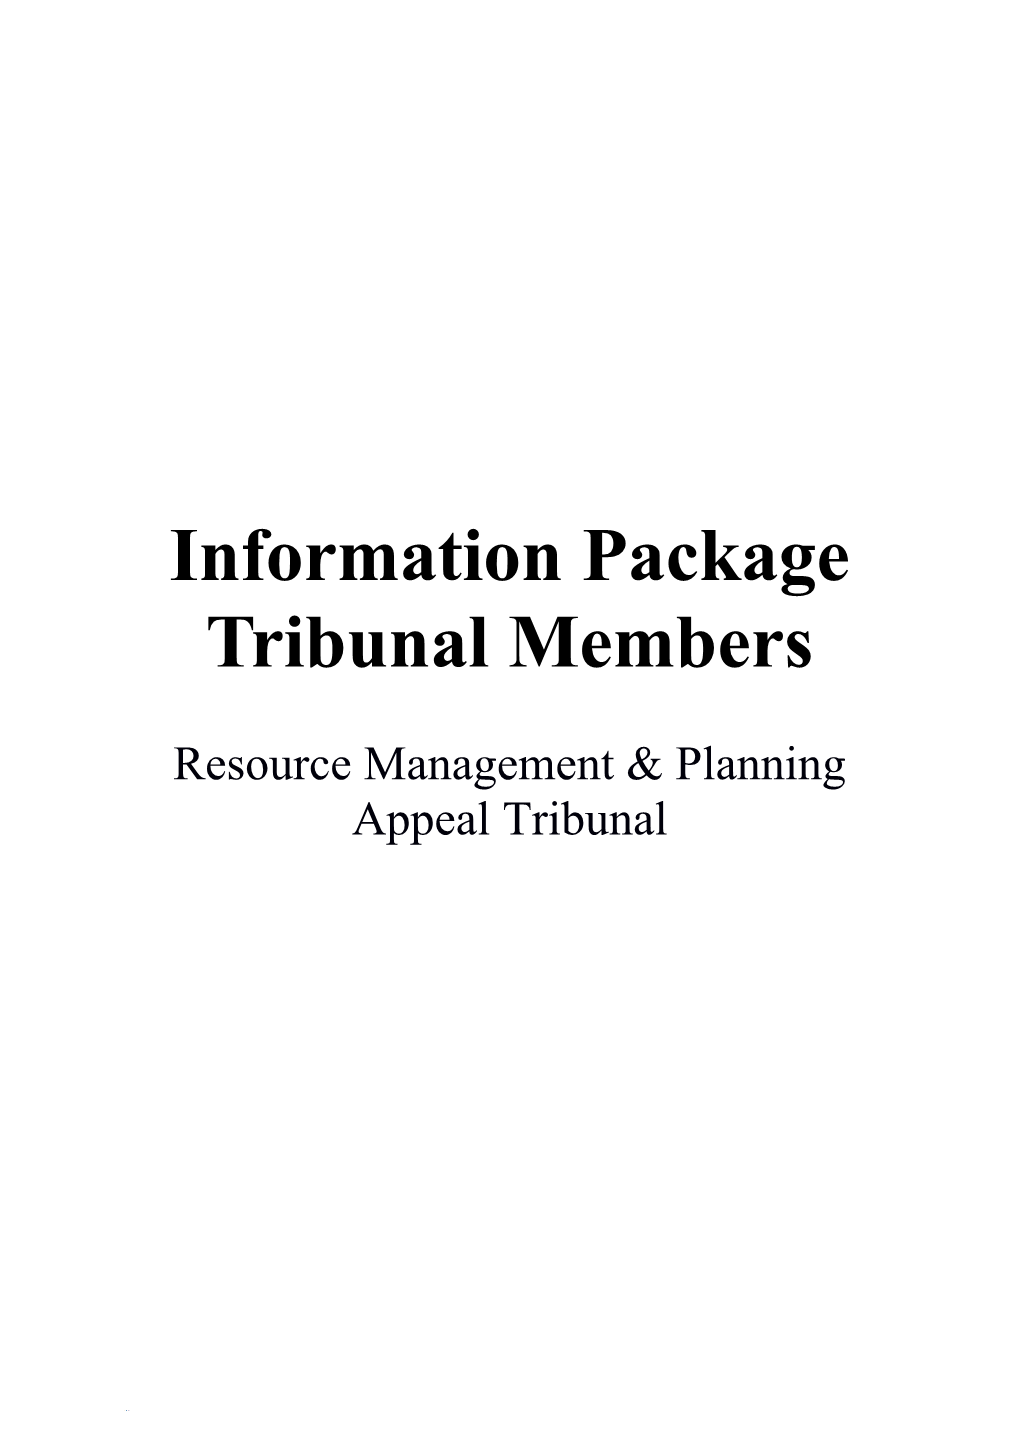 Resource Management & Planning Appeal Tribunal